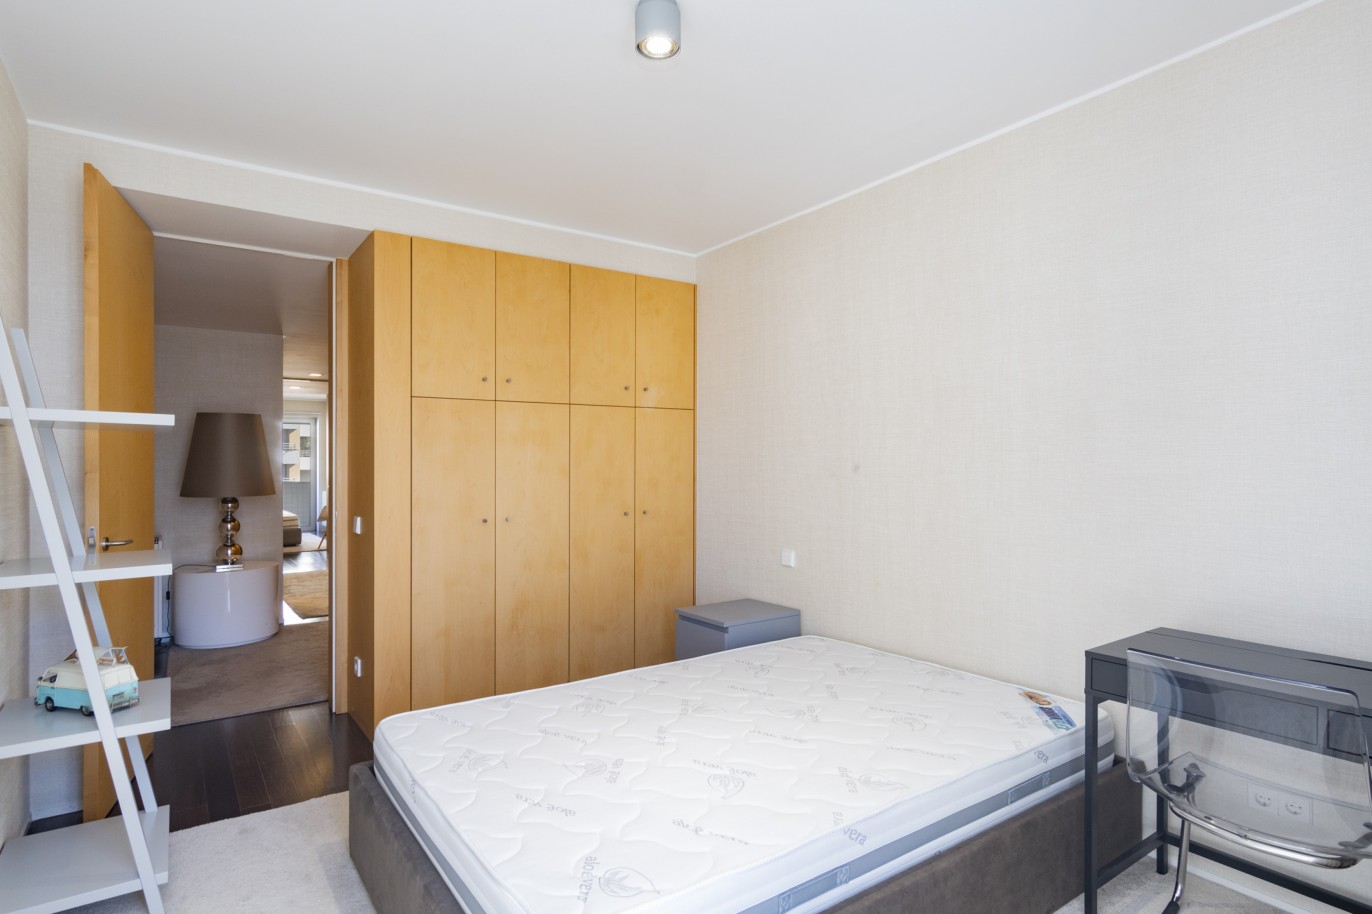 Apartamento Dúplex de 3 Dormitorios con balcón, en venta, en Boavista, Porto, Portugal_217713